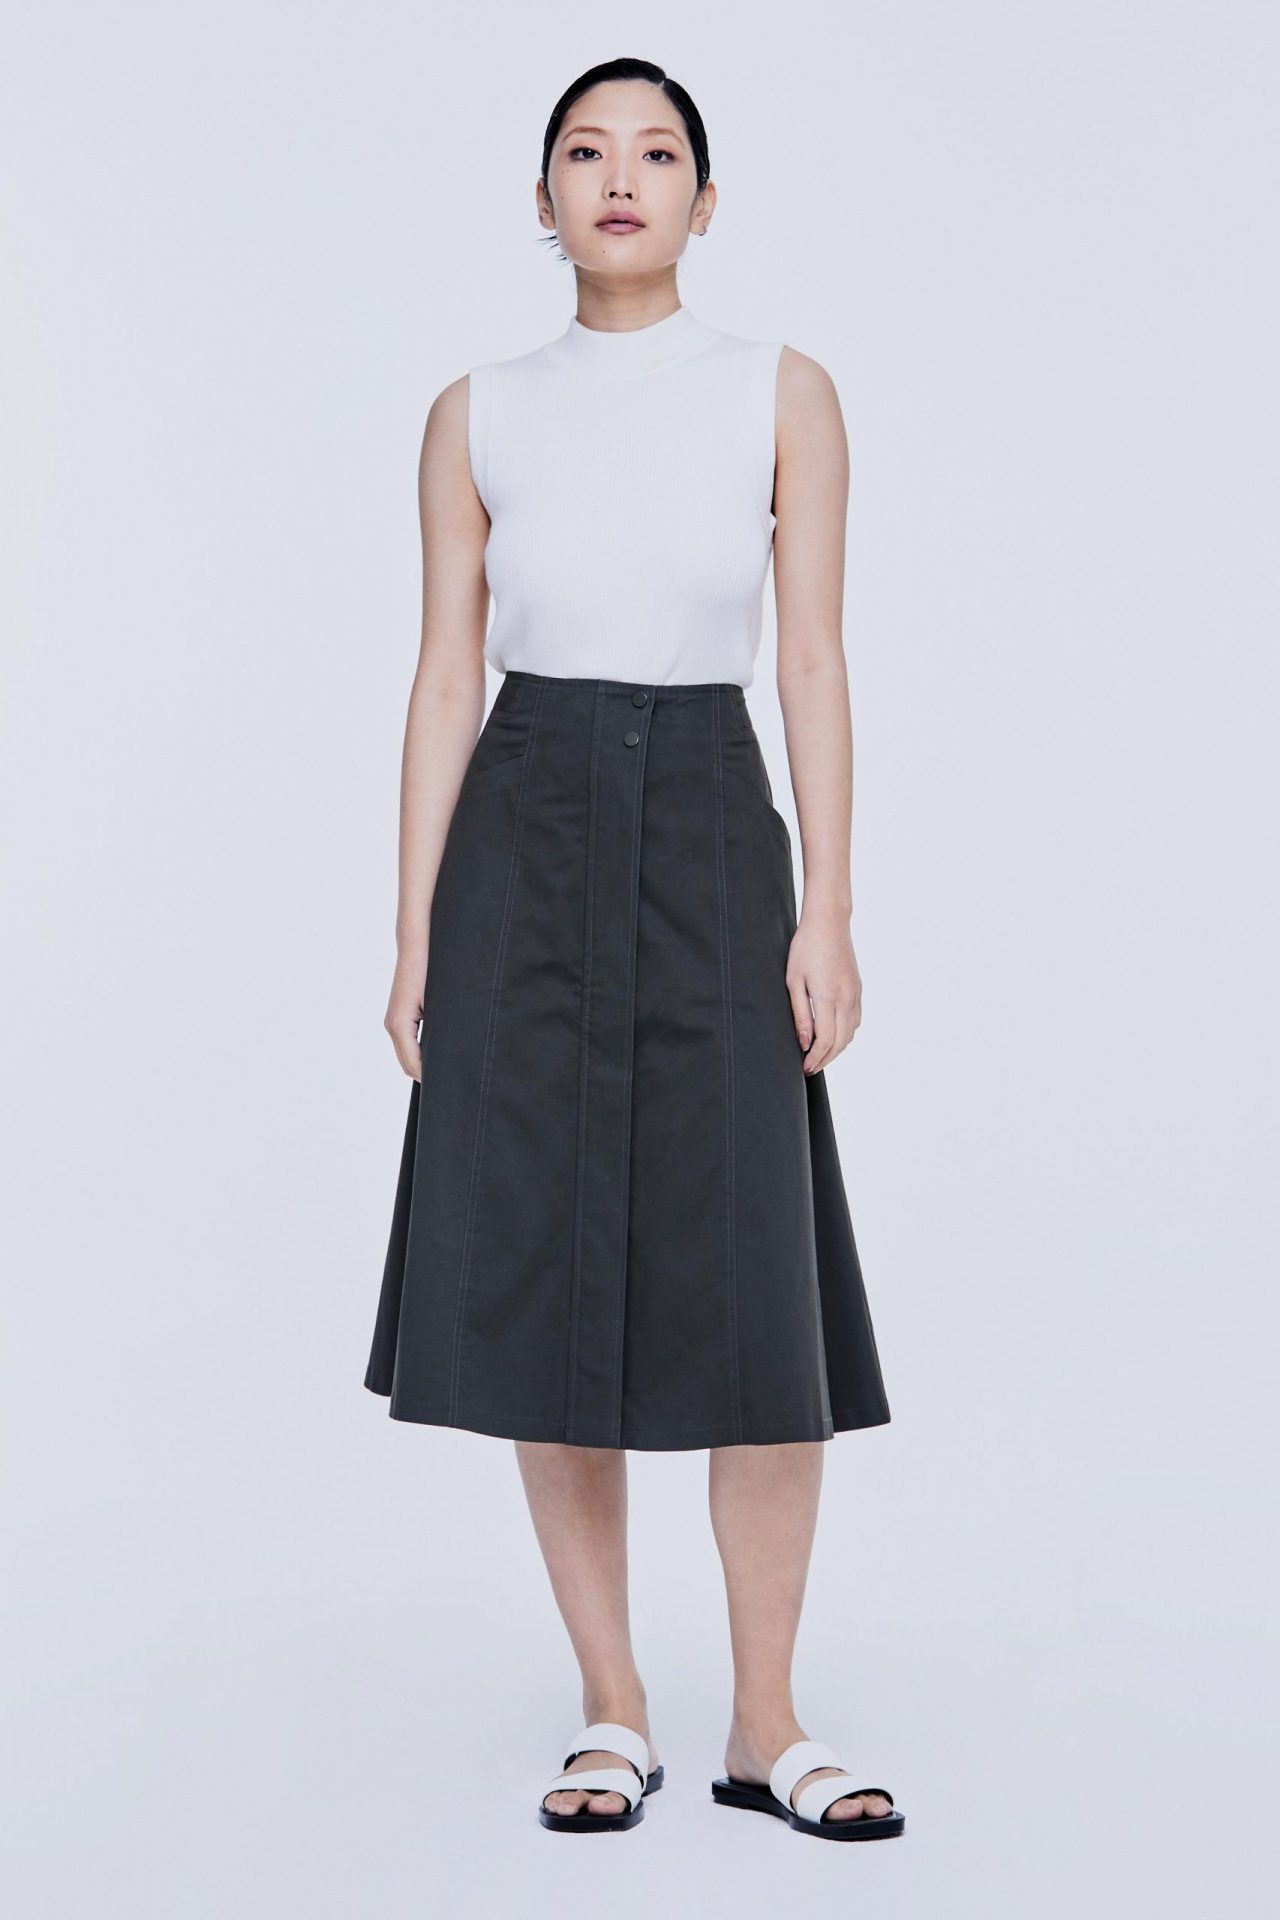 Cotton Placket Skirt - SANS & SANS (MALAYSIA)